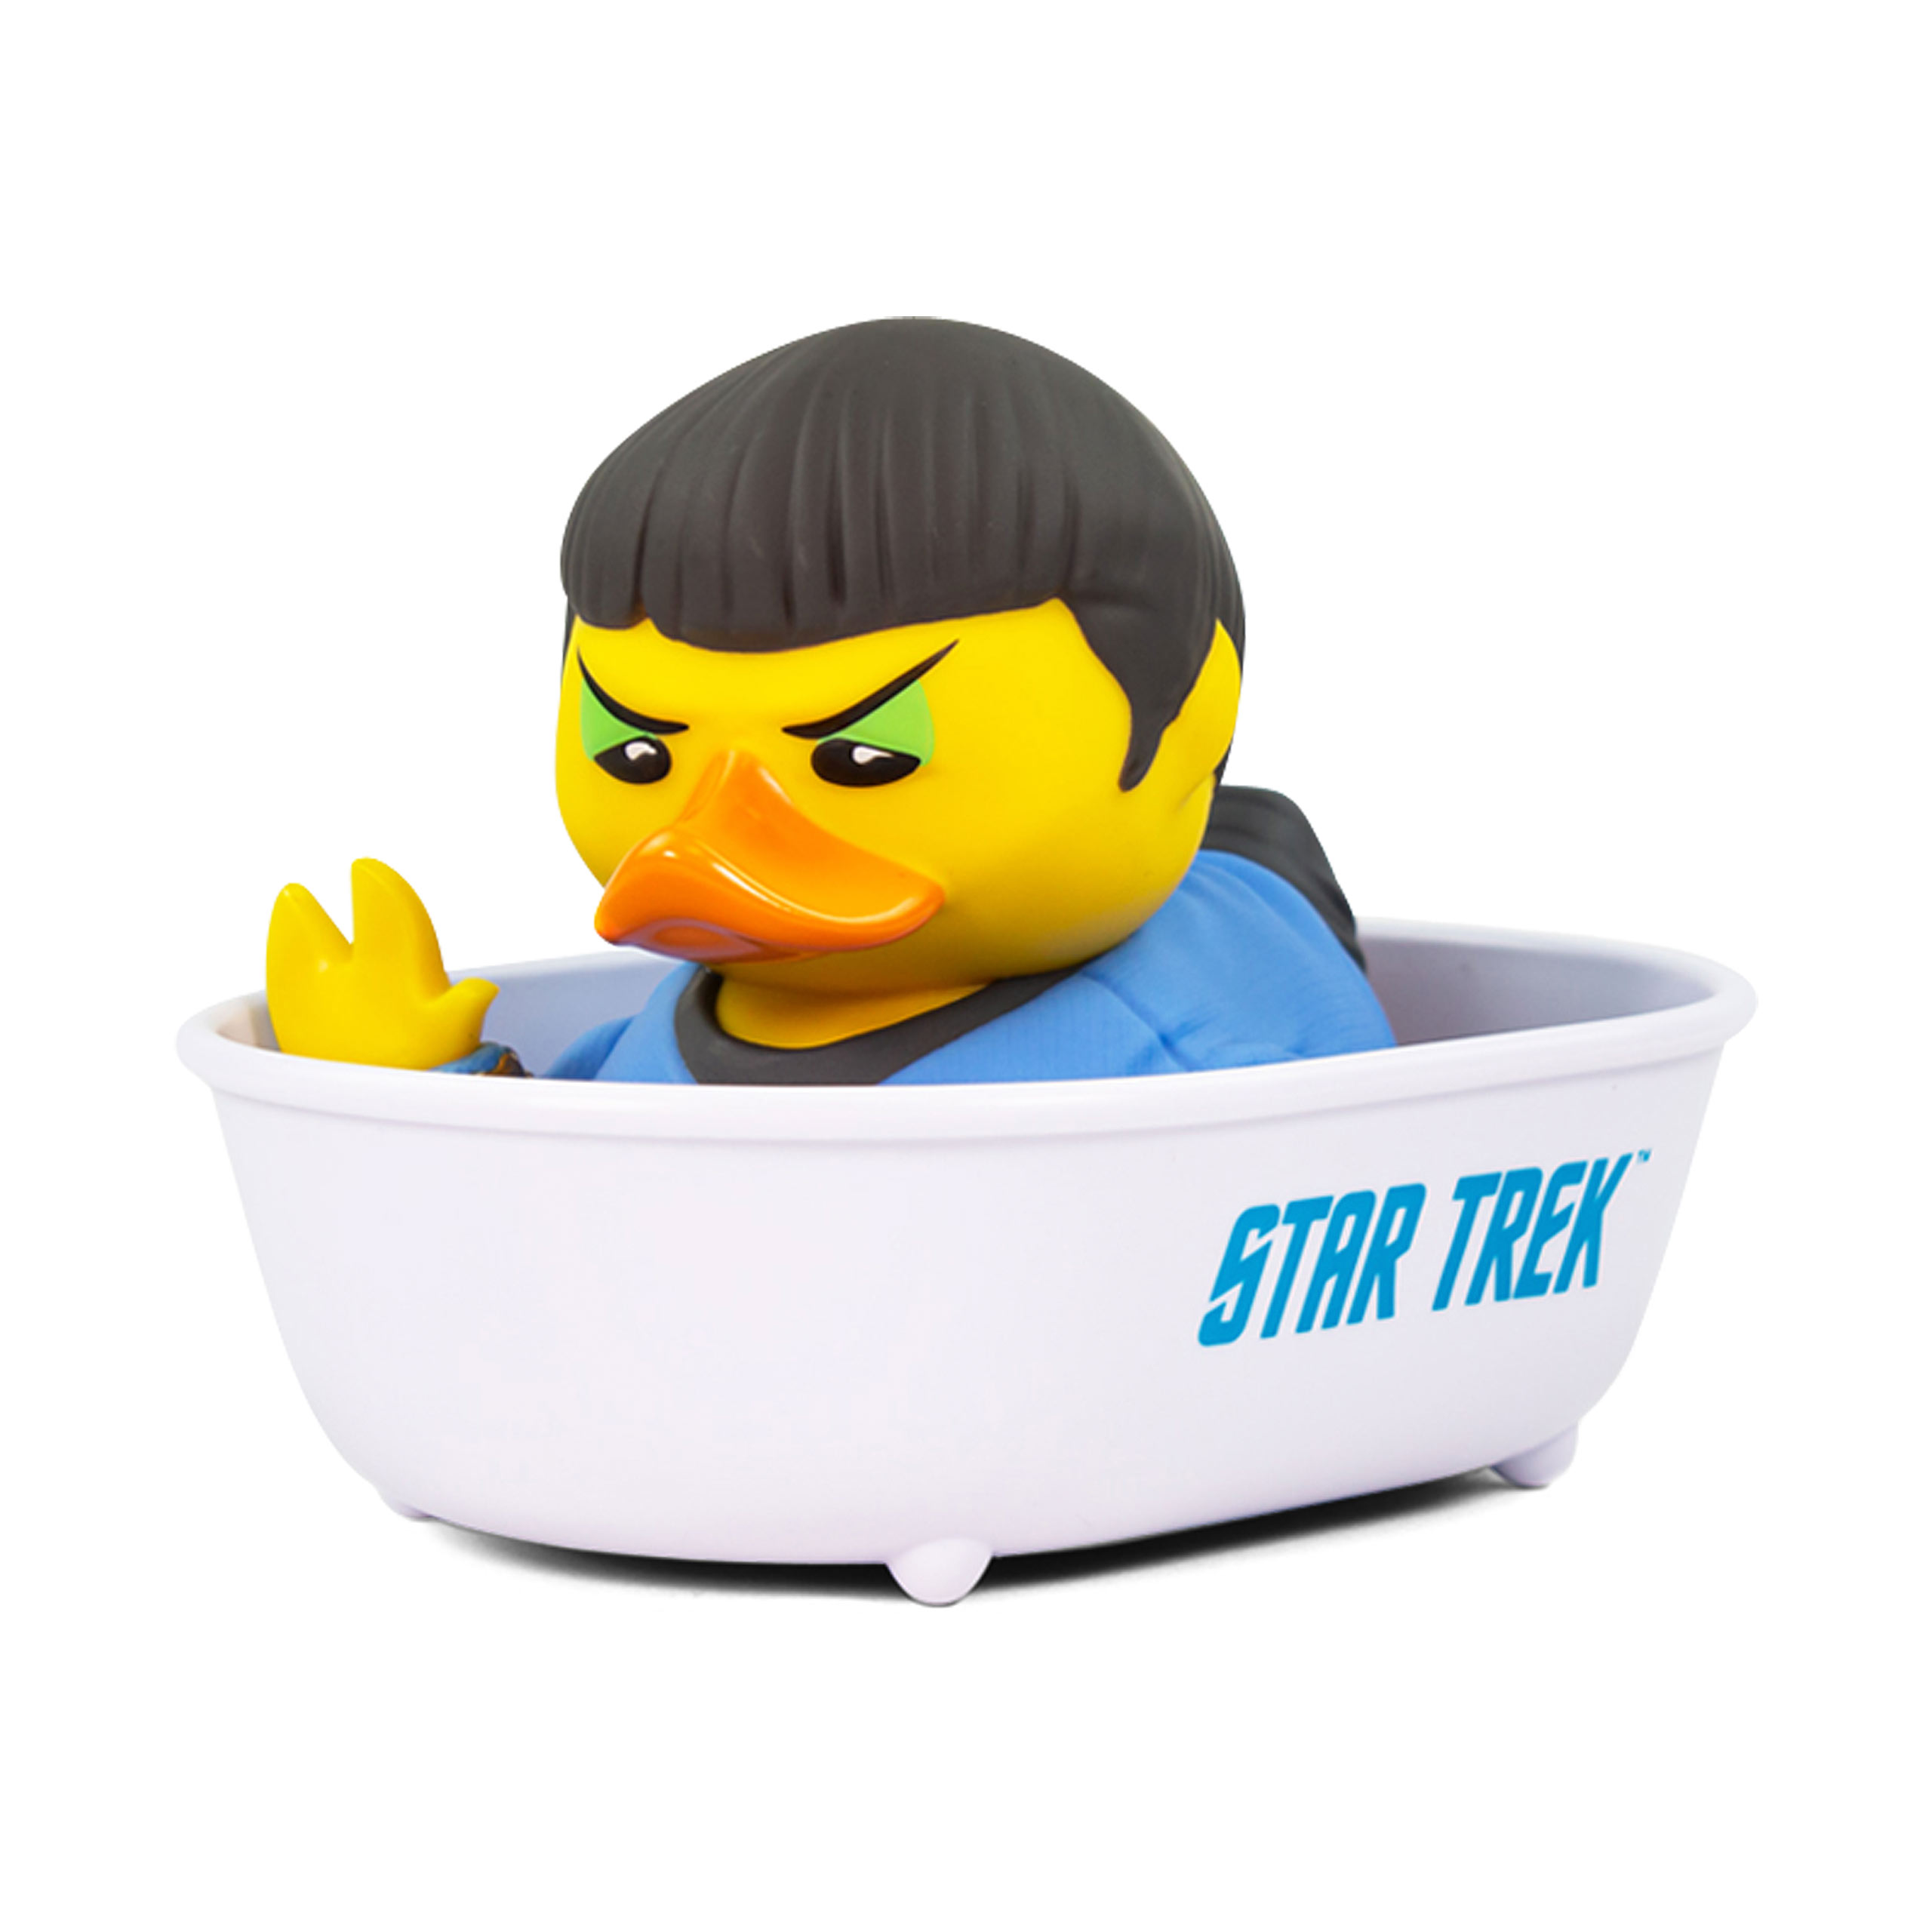 Star Trek - Canard décoratif Spock TUBBZ